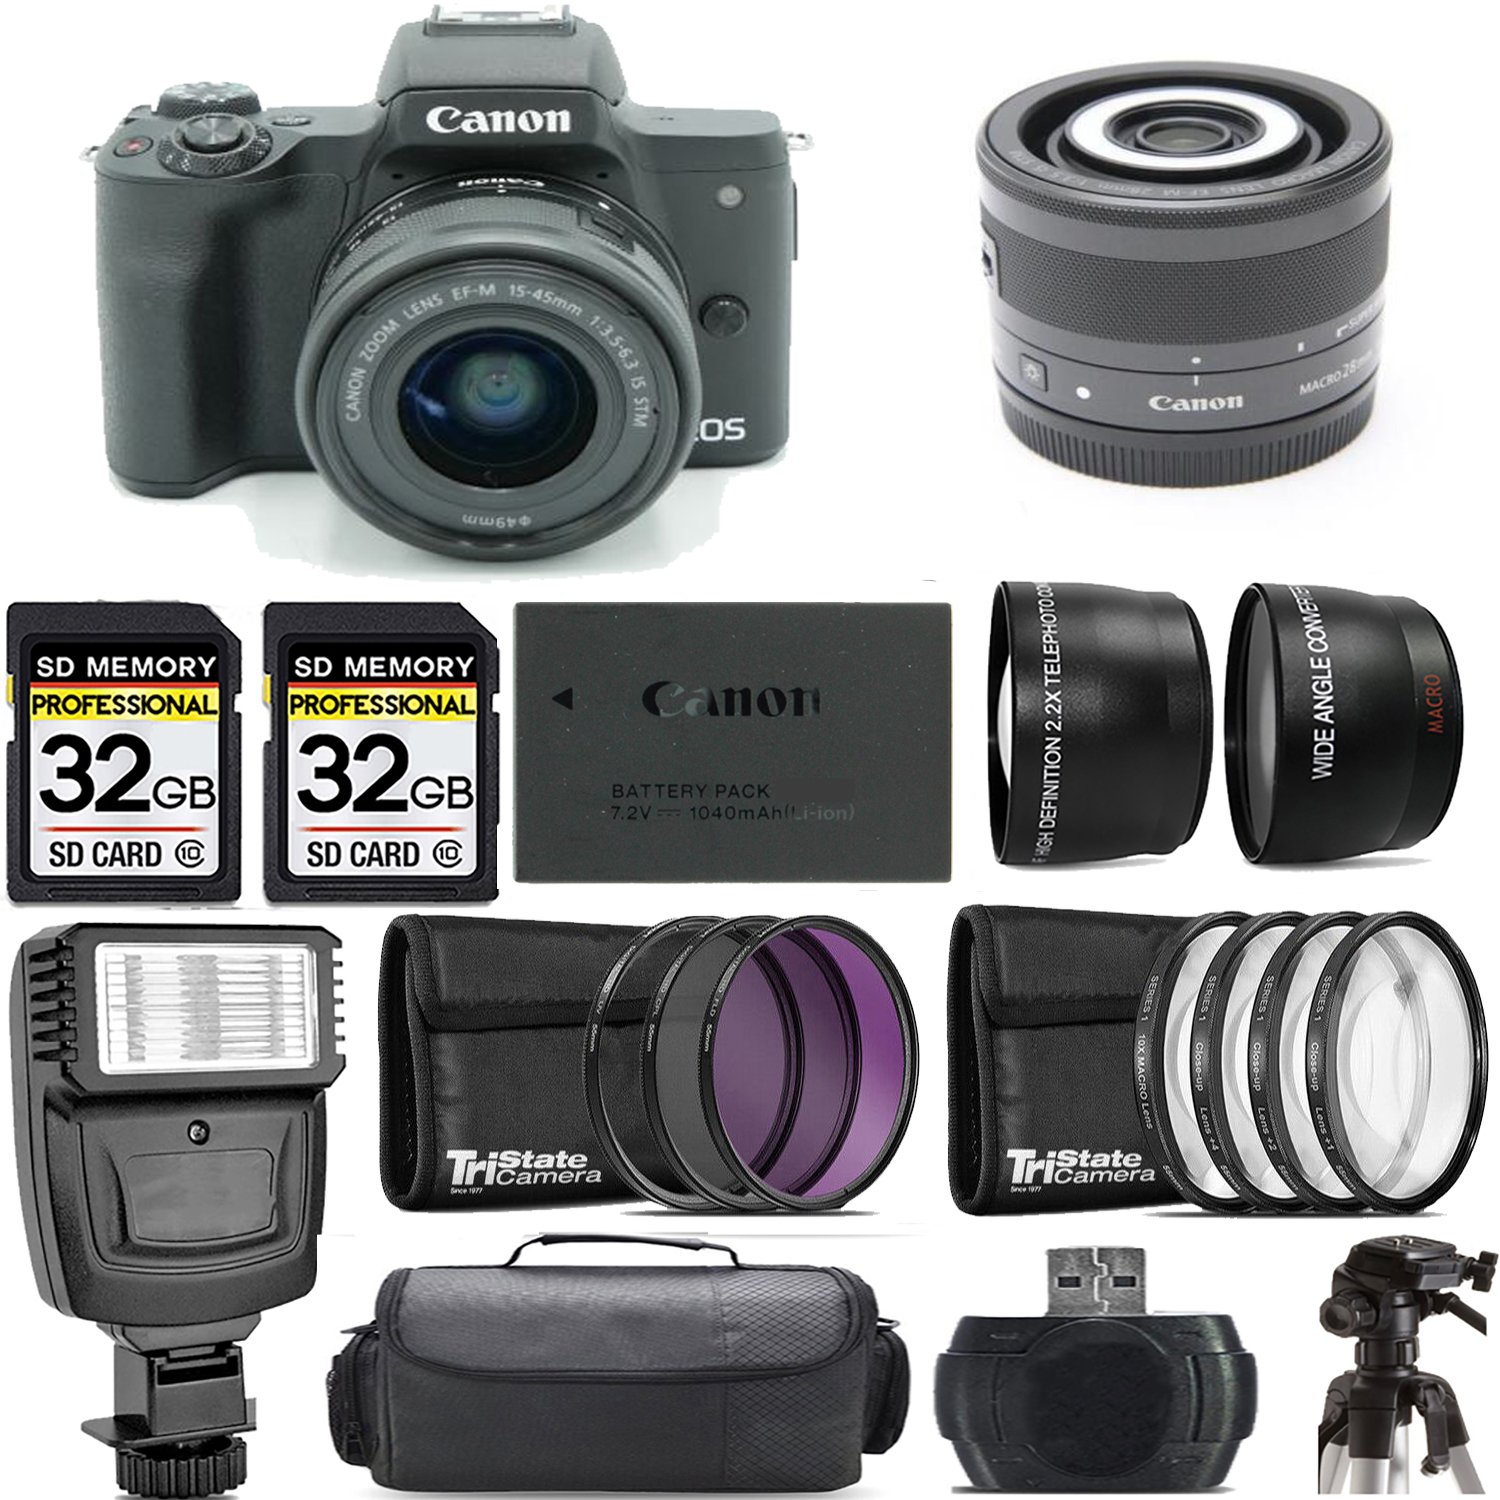 M50 Mark II + 15-45mm Lens (Black) + 28mm Macro IS STM Lens + Flash - Kit *FREE SHIPPING*